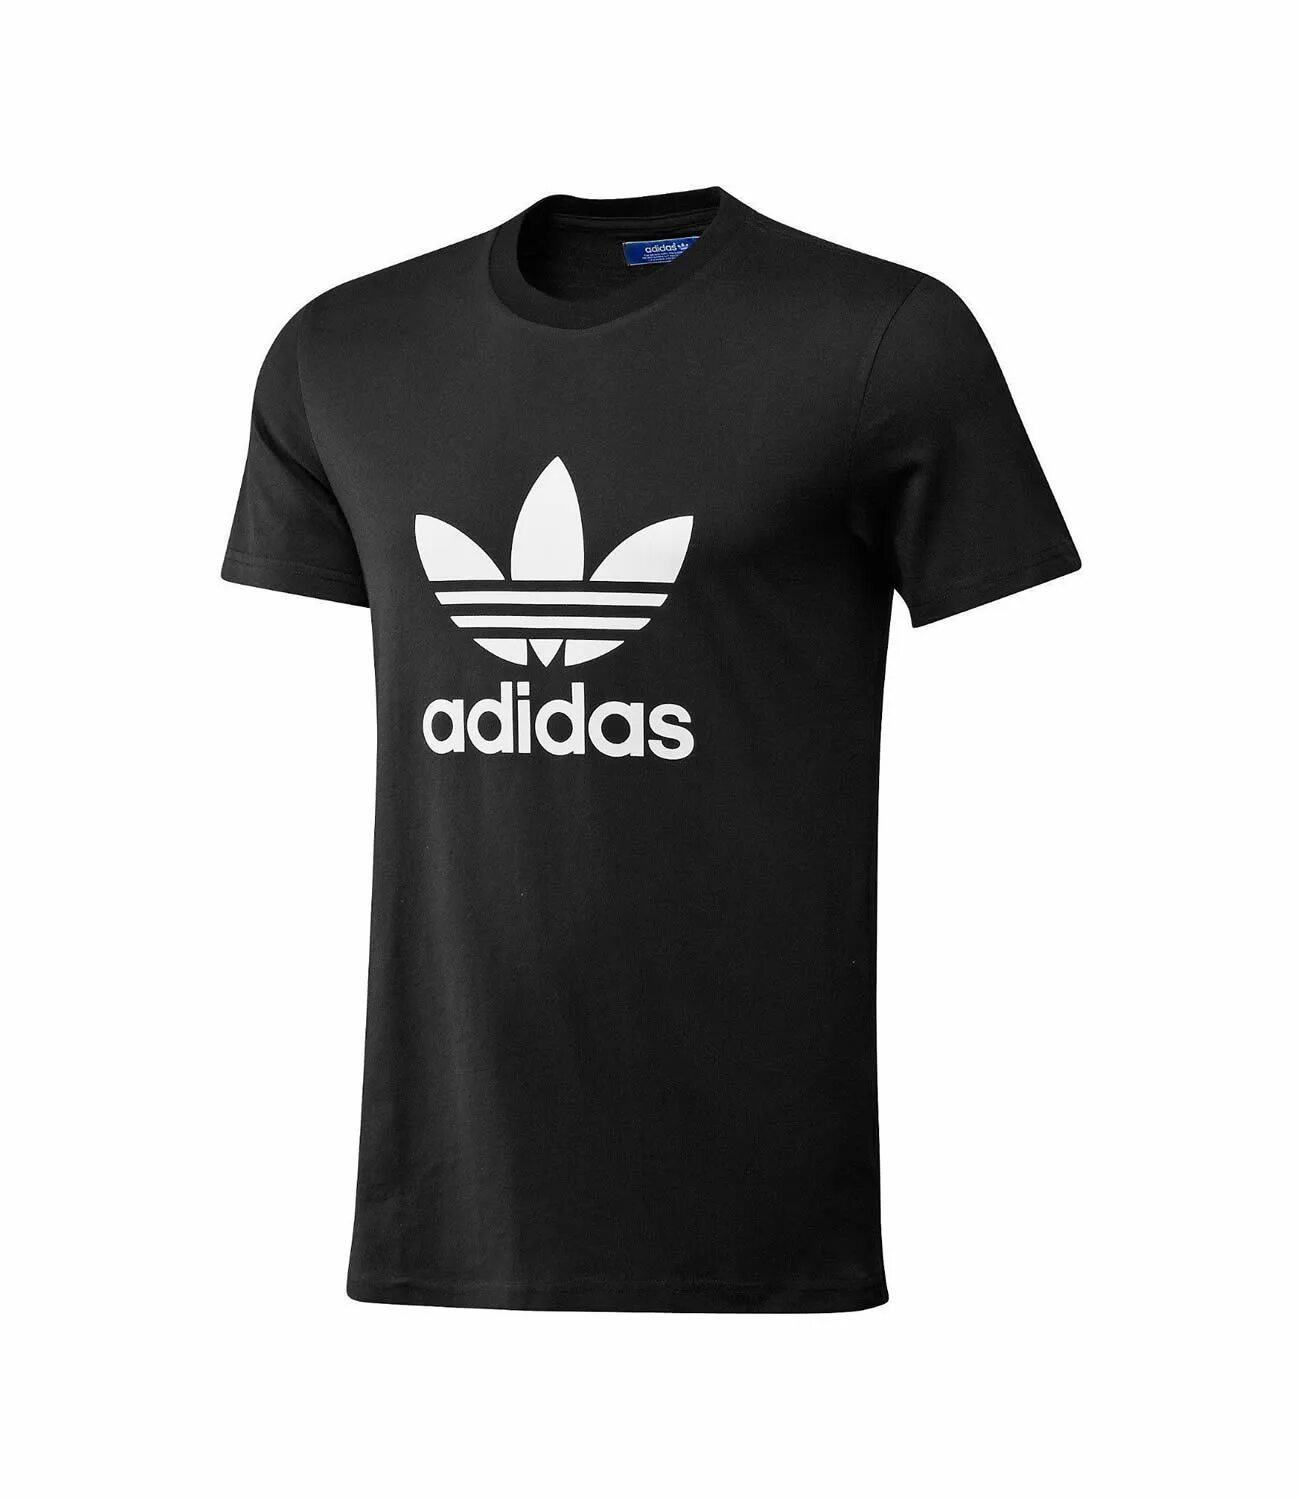 Давай адидас. Adidas Printshop. T-Shirt adidas Black. Адидас т ширт. Adidas t Shirt New collection.